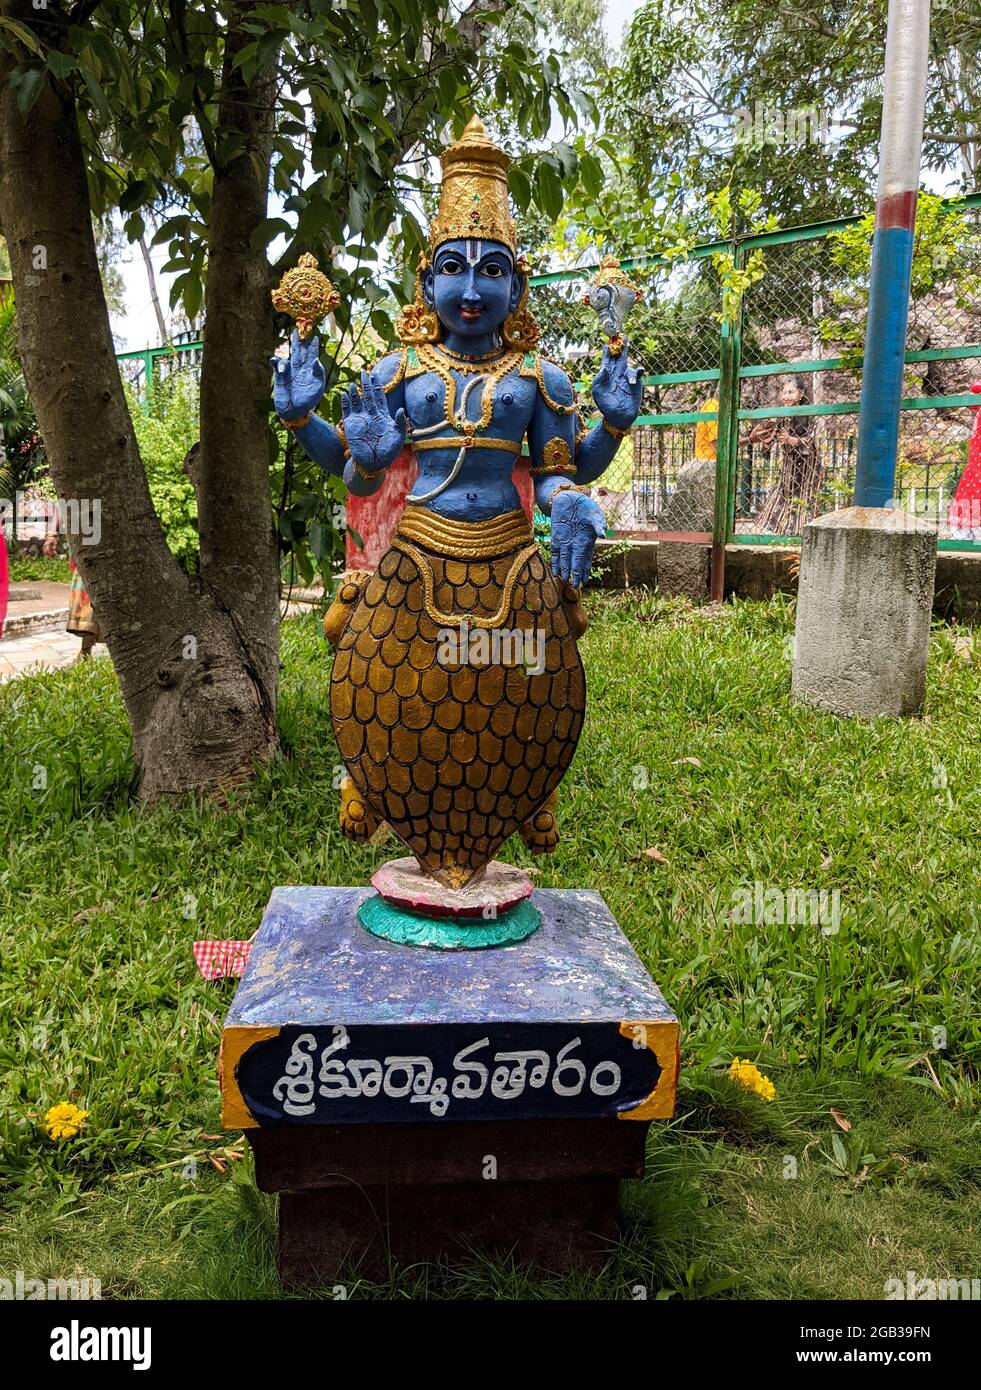 Una vista vertical larga del ídolo avatar de Kurma en el jardín natural de la roca del arco en Tirumala: Tirumala, Andhra Pradesh, India-Julio 10,2021 Foto de stock